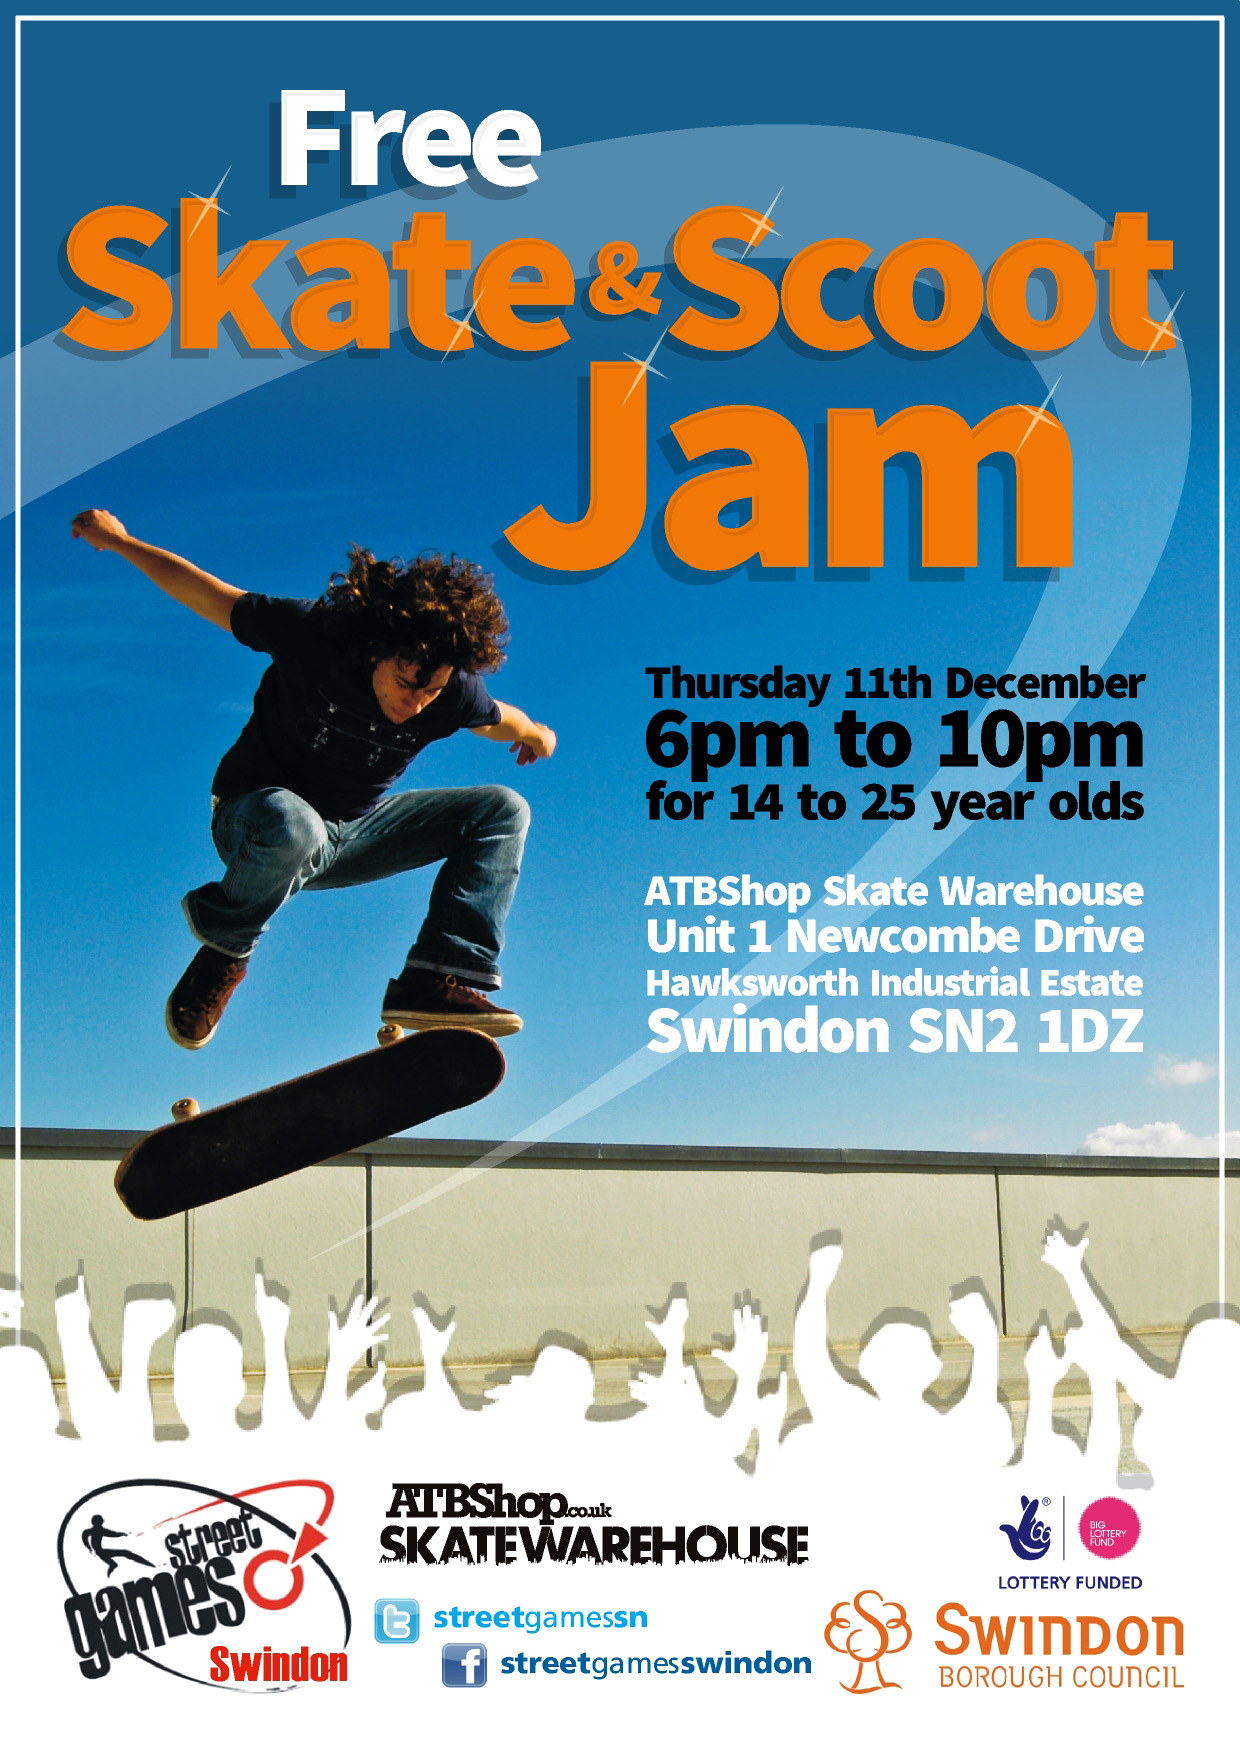 Free Skate & Scoot Jam